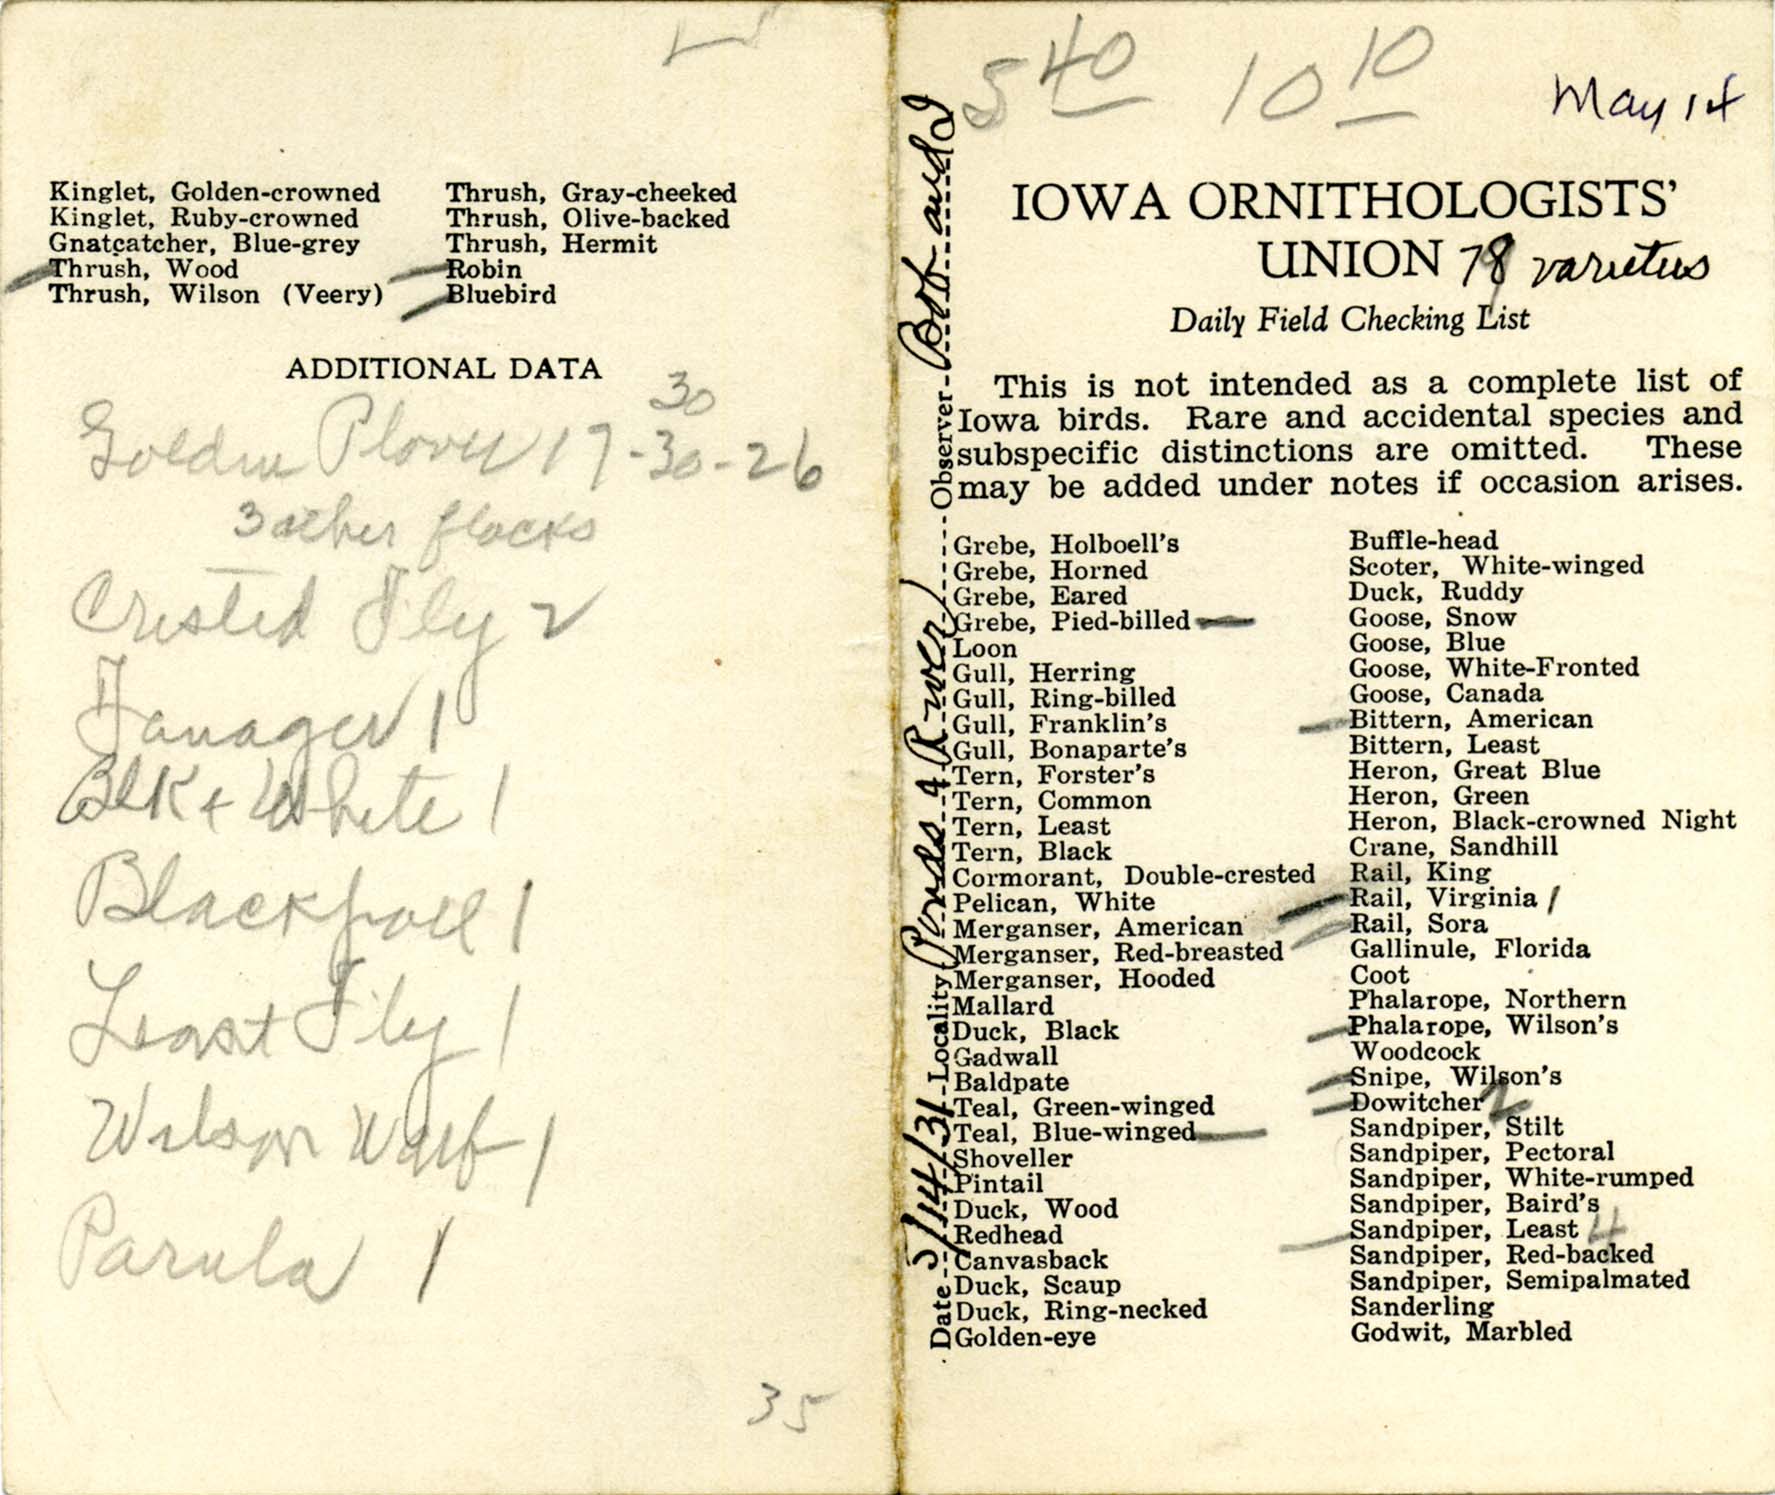 Daily field checking list, Walter Rosene, May 14, 1931